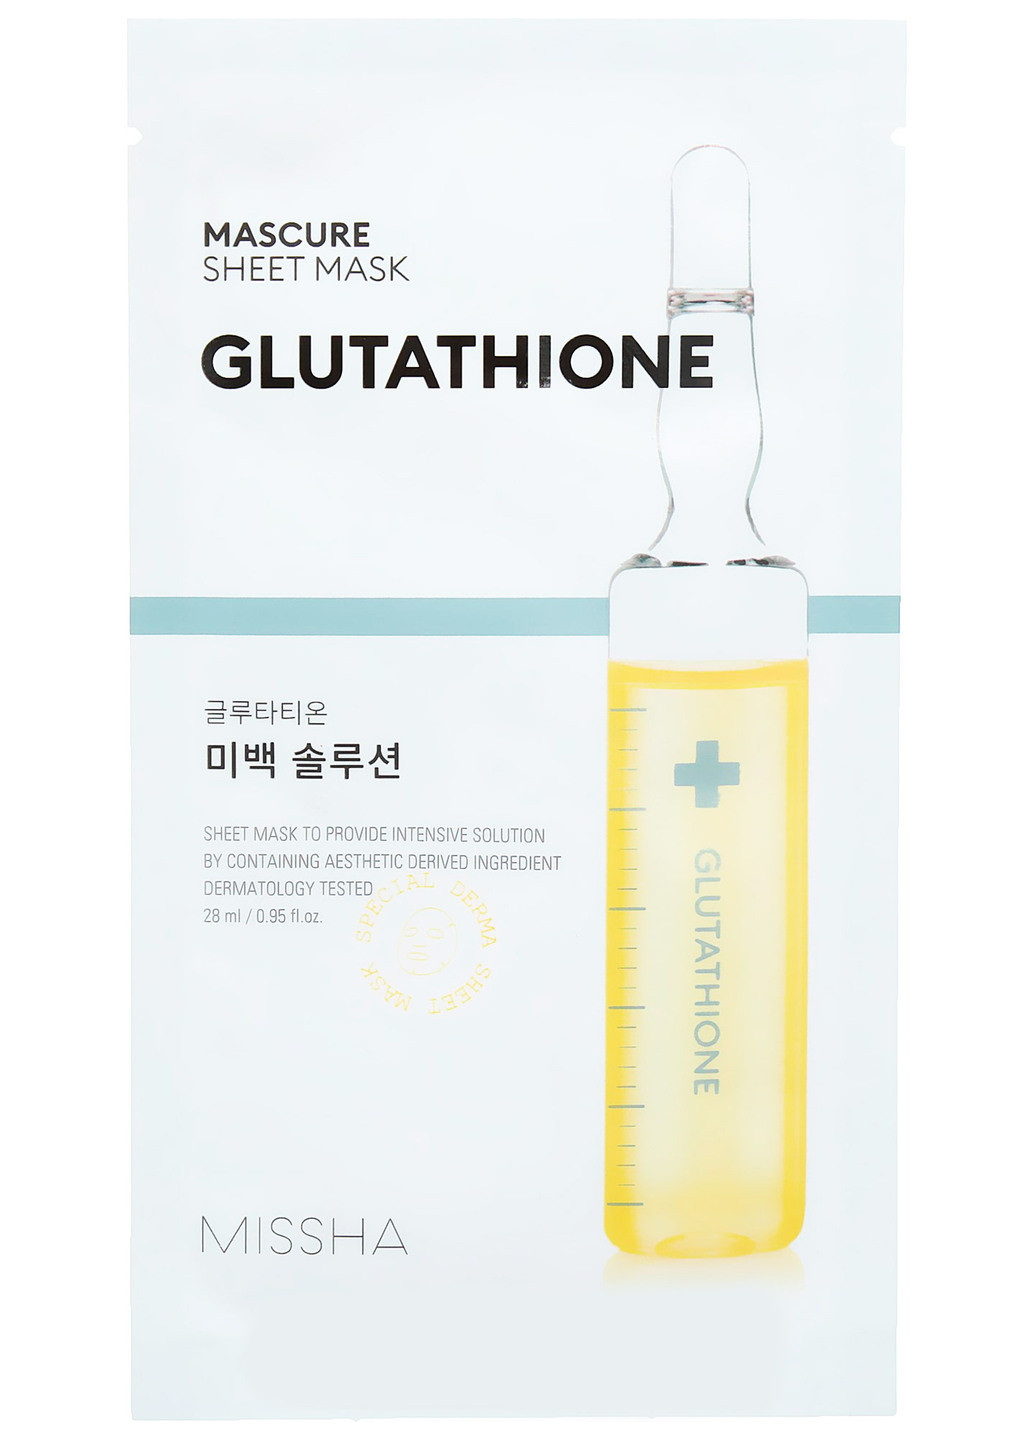 Маска осветляющая с глутатионом Mascure Whitening Solution Sheet Mask Glutathione (1 шт.) MISSHA (202414211)